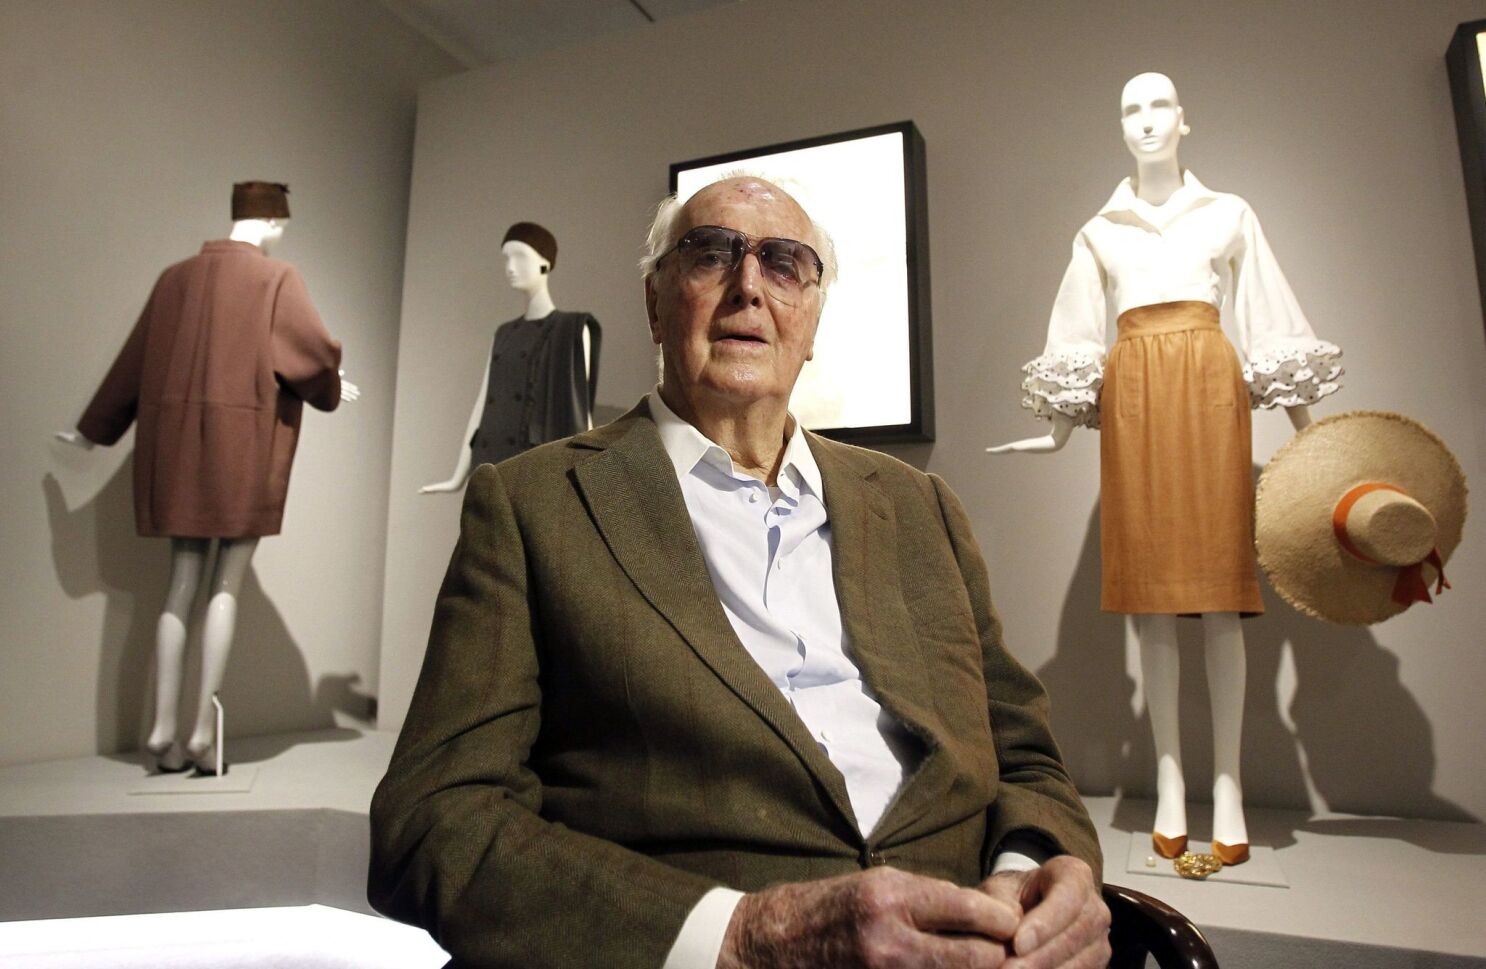 Hubert de Givenchy dies at 91; courtly designer dressed Audrey Hepburn,  built fashion empire - Los Angeles Times